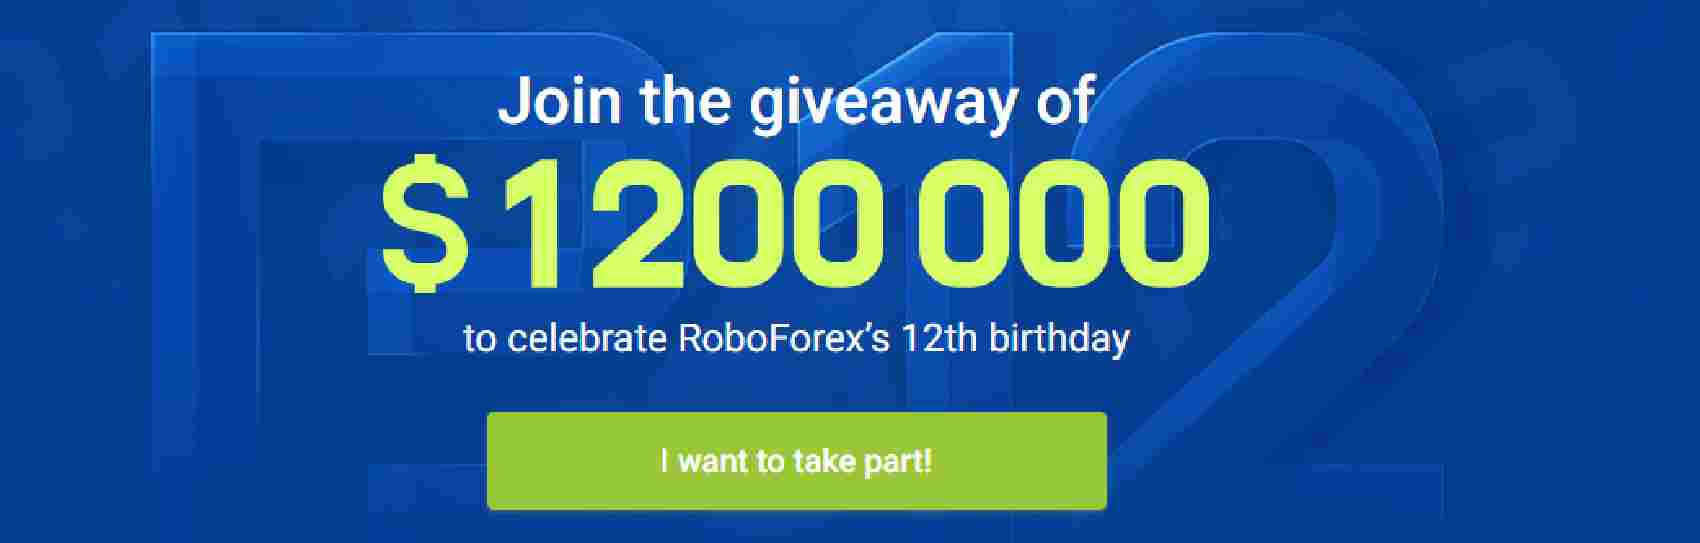 Promotion worth ,200,000 – RoboForex